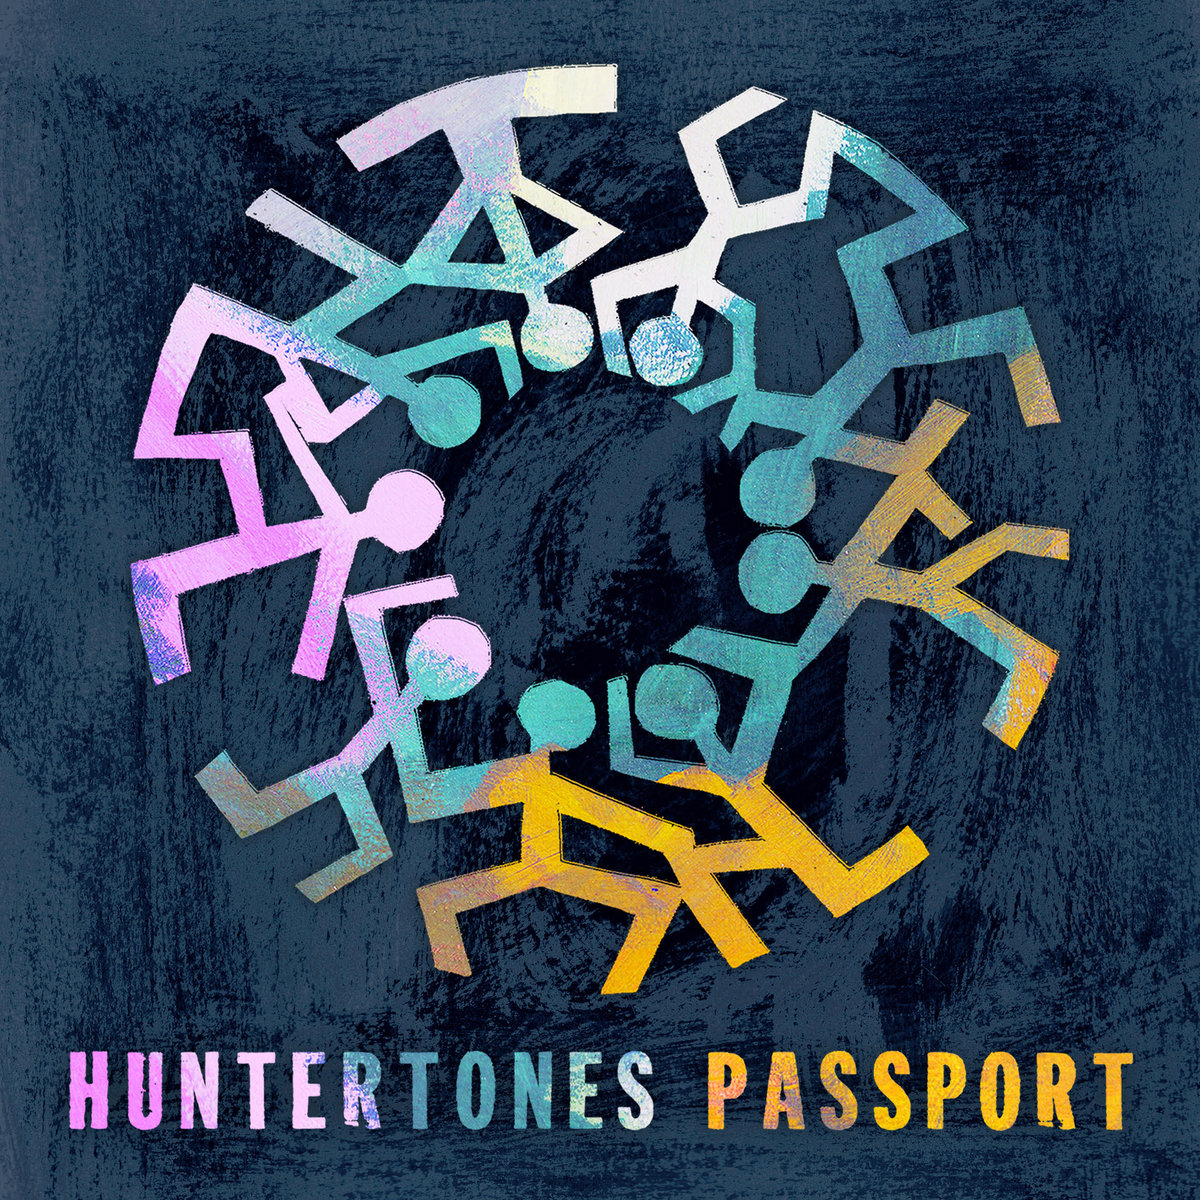 Huntertones Passport cover artwork